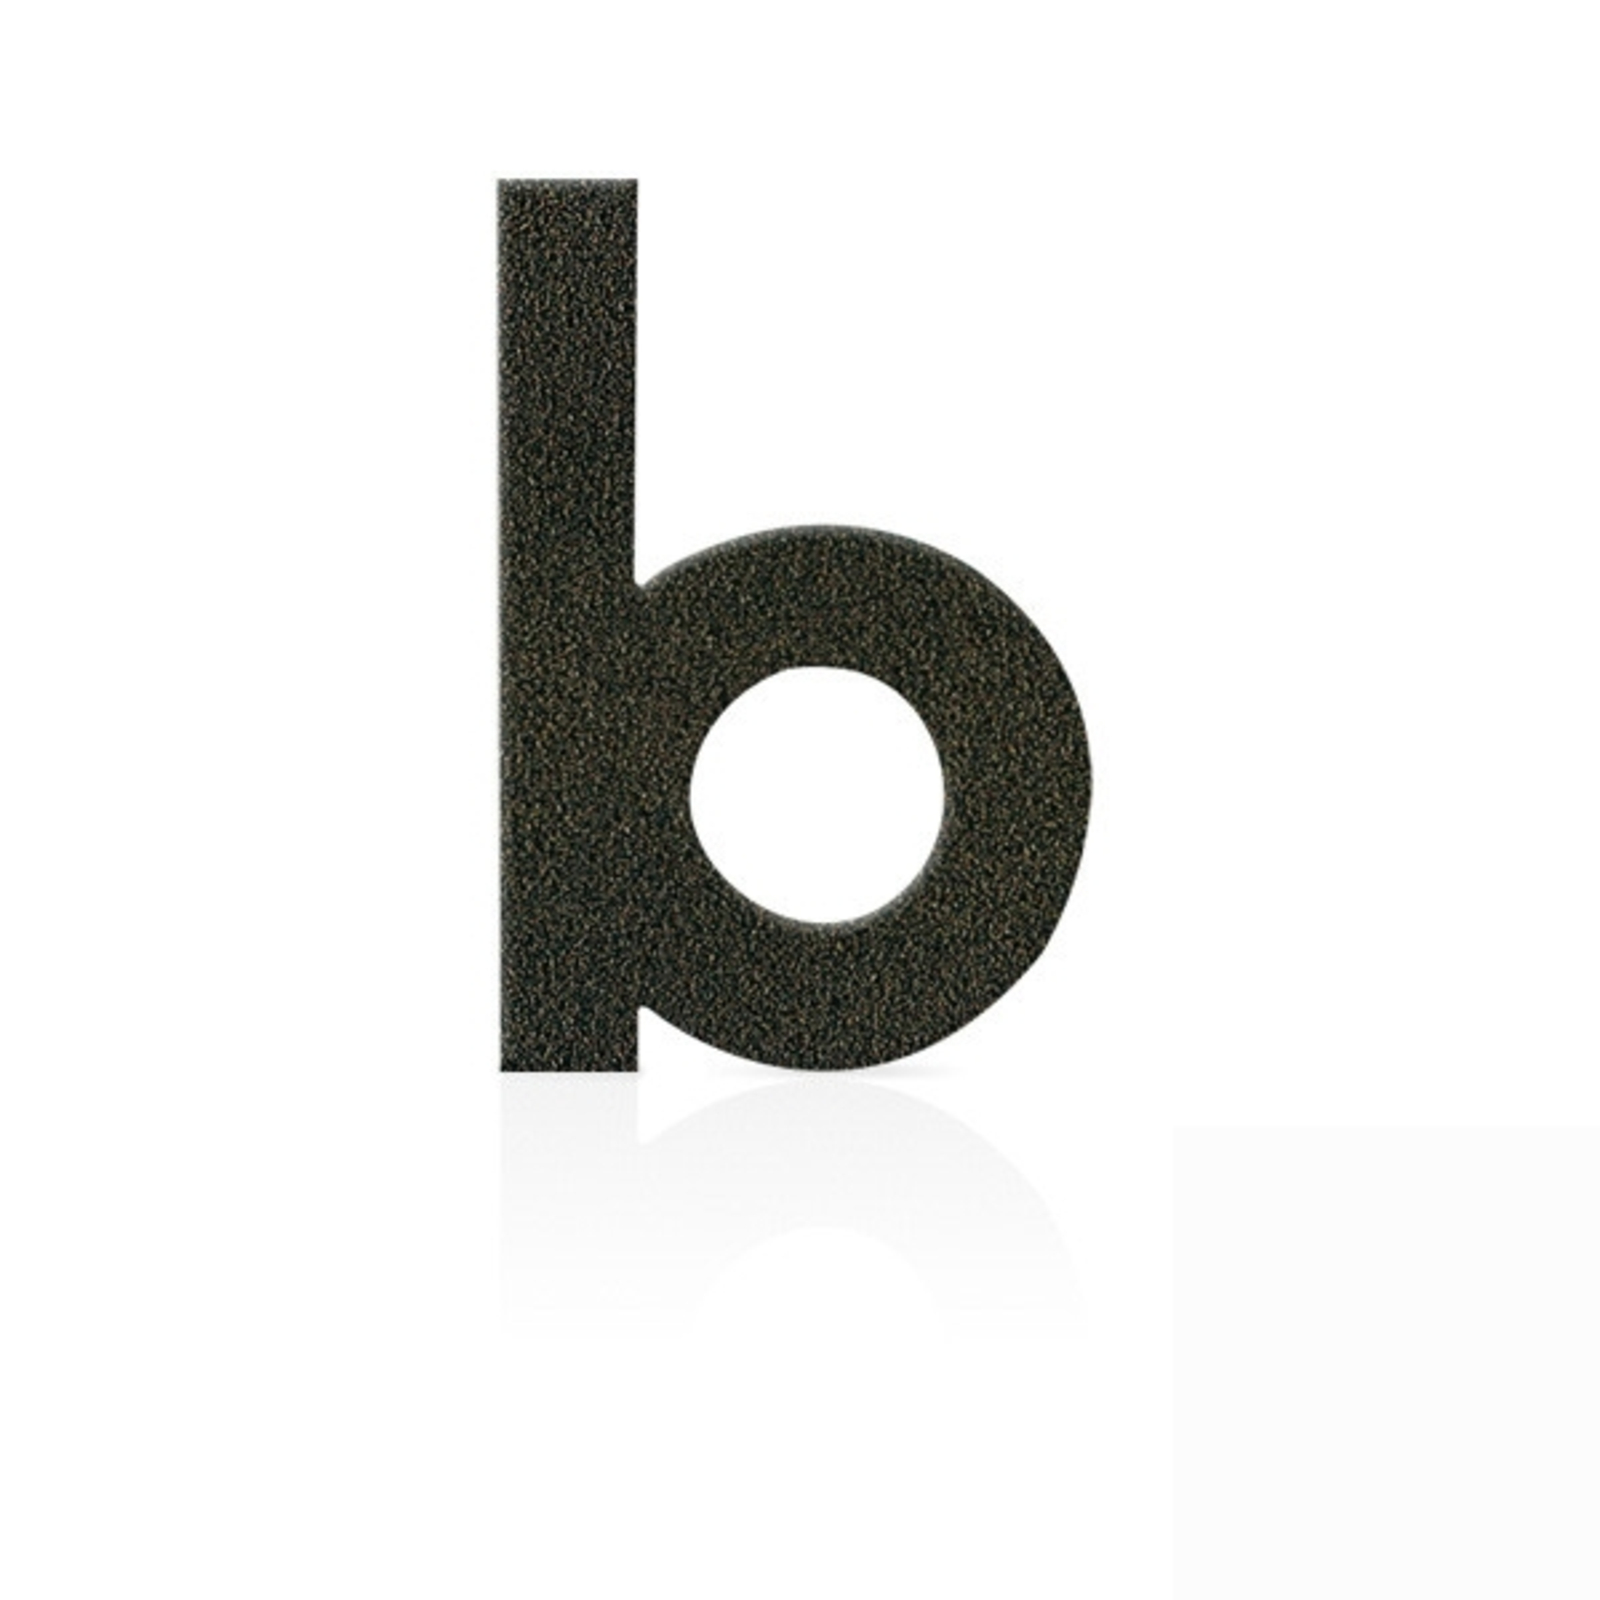 Numer domu ze stali szlachetnej litera b